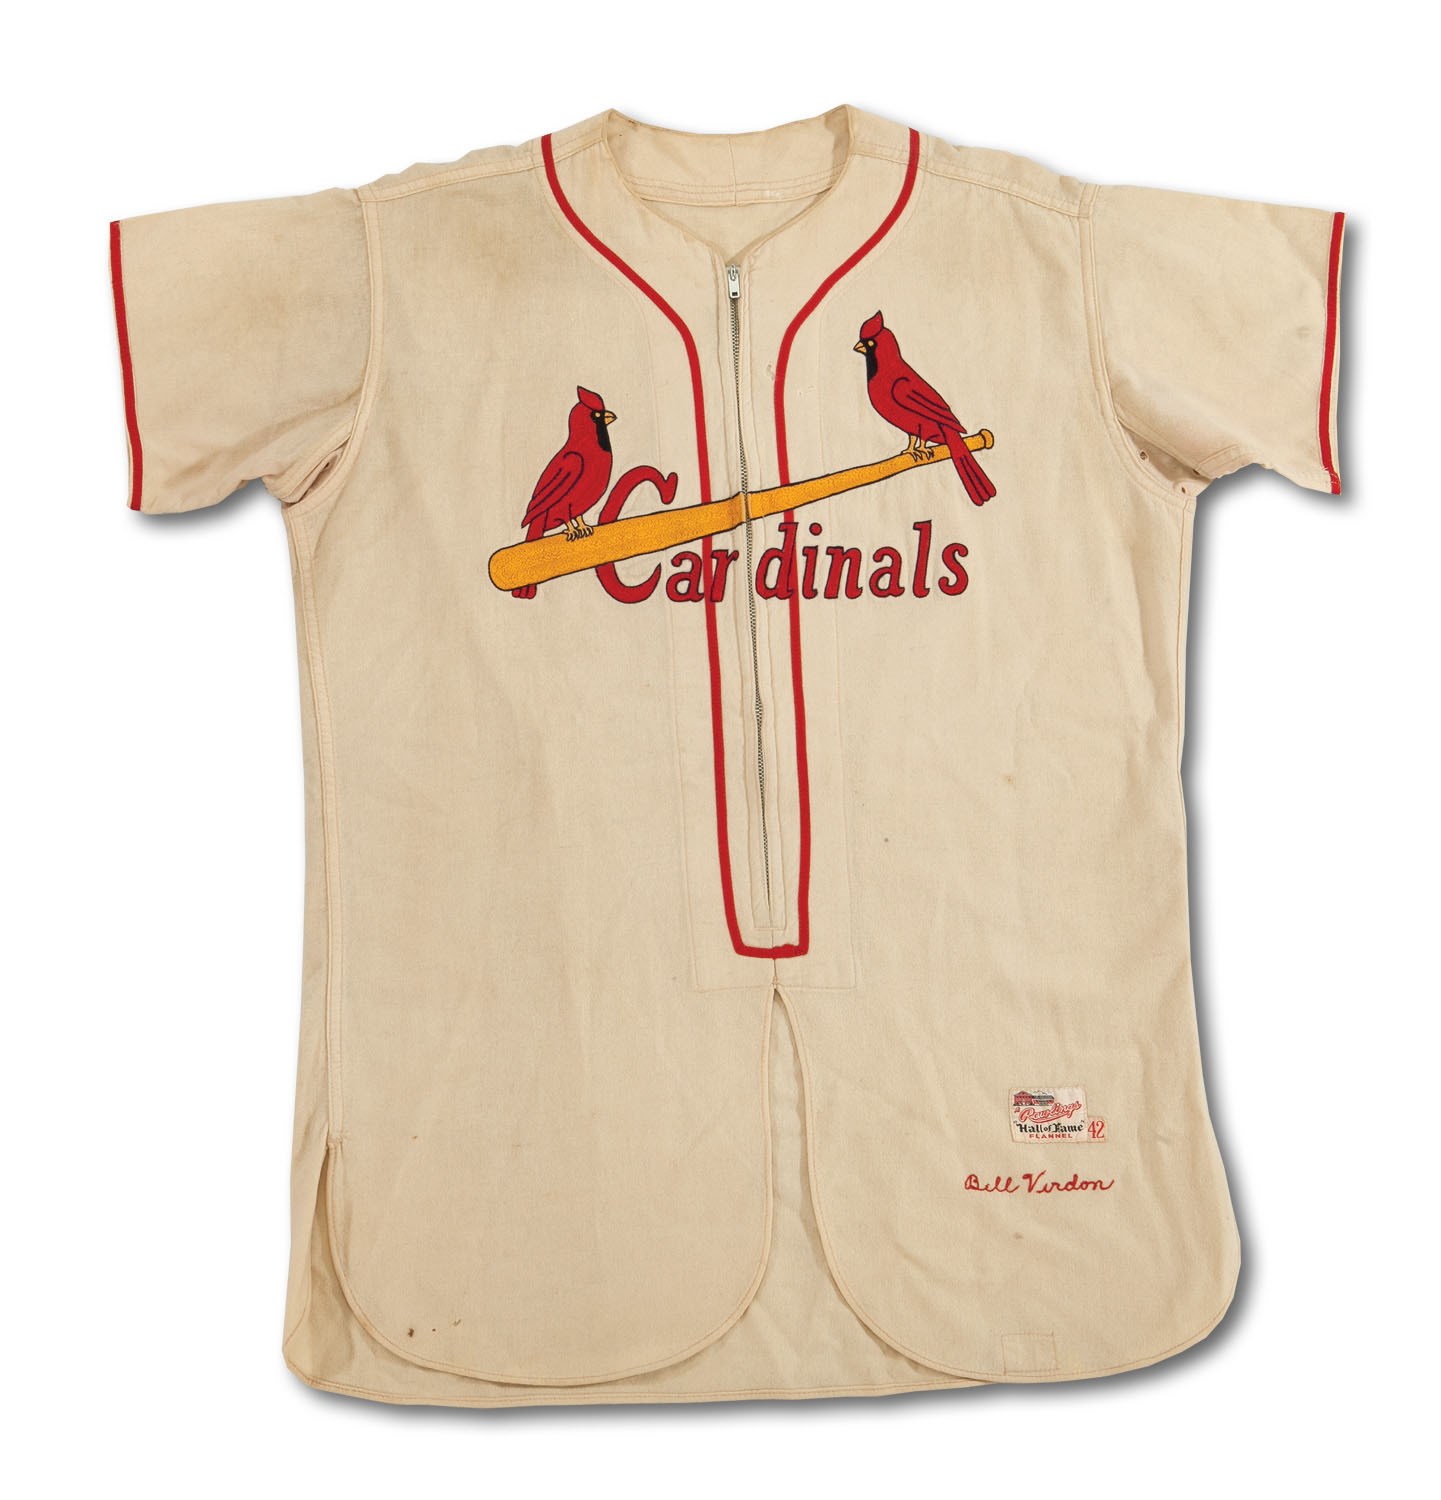 St. Louis Cardinals 1955